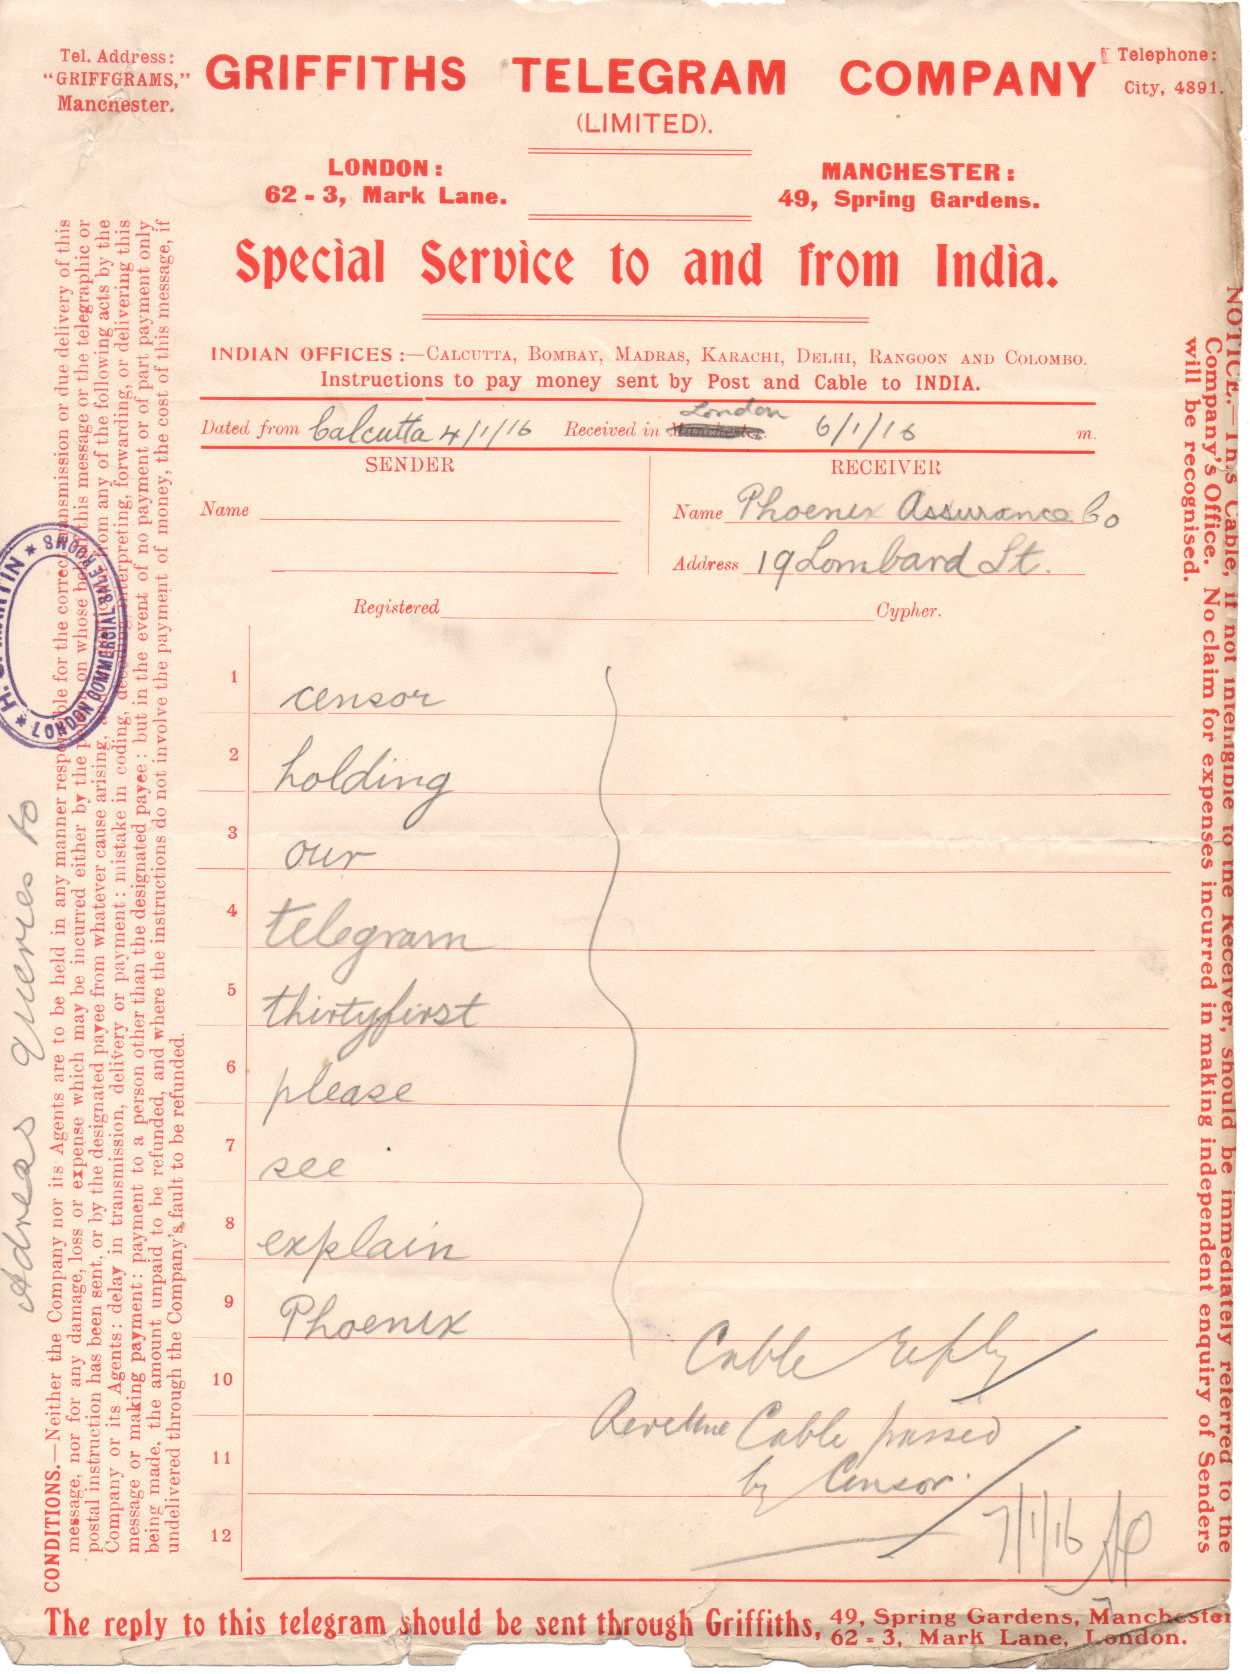 Griffiths Telegram Co. Form - 1916